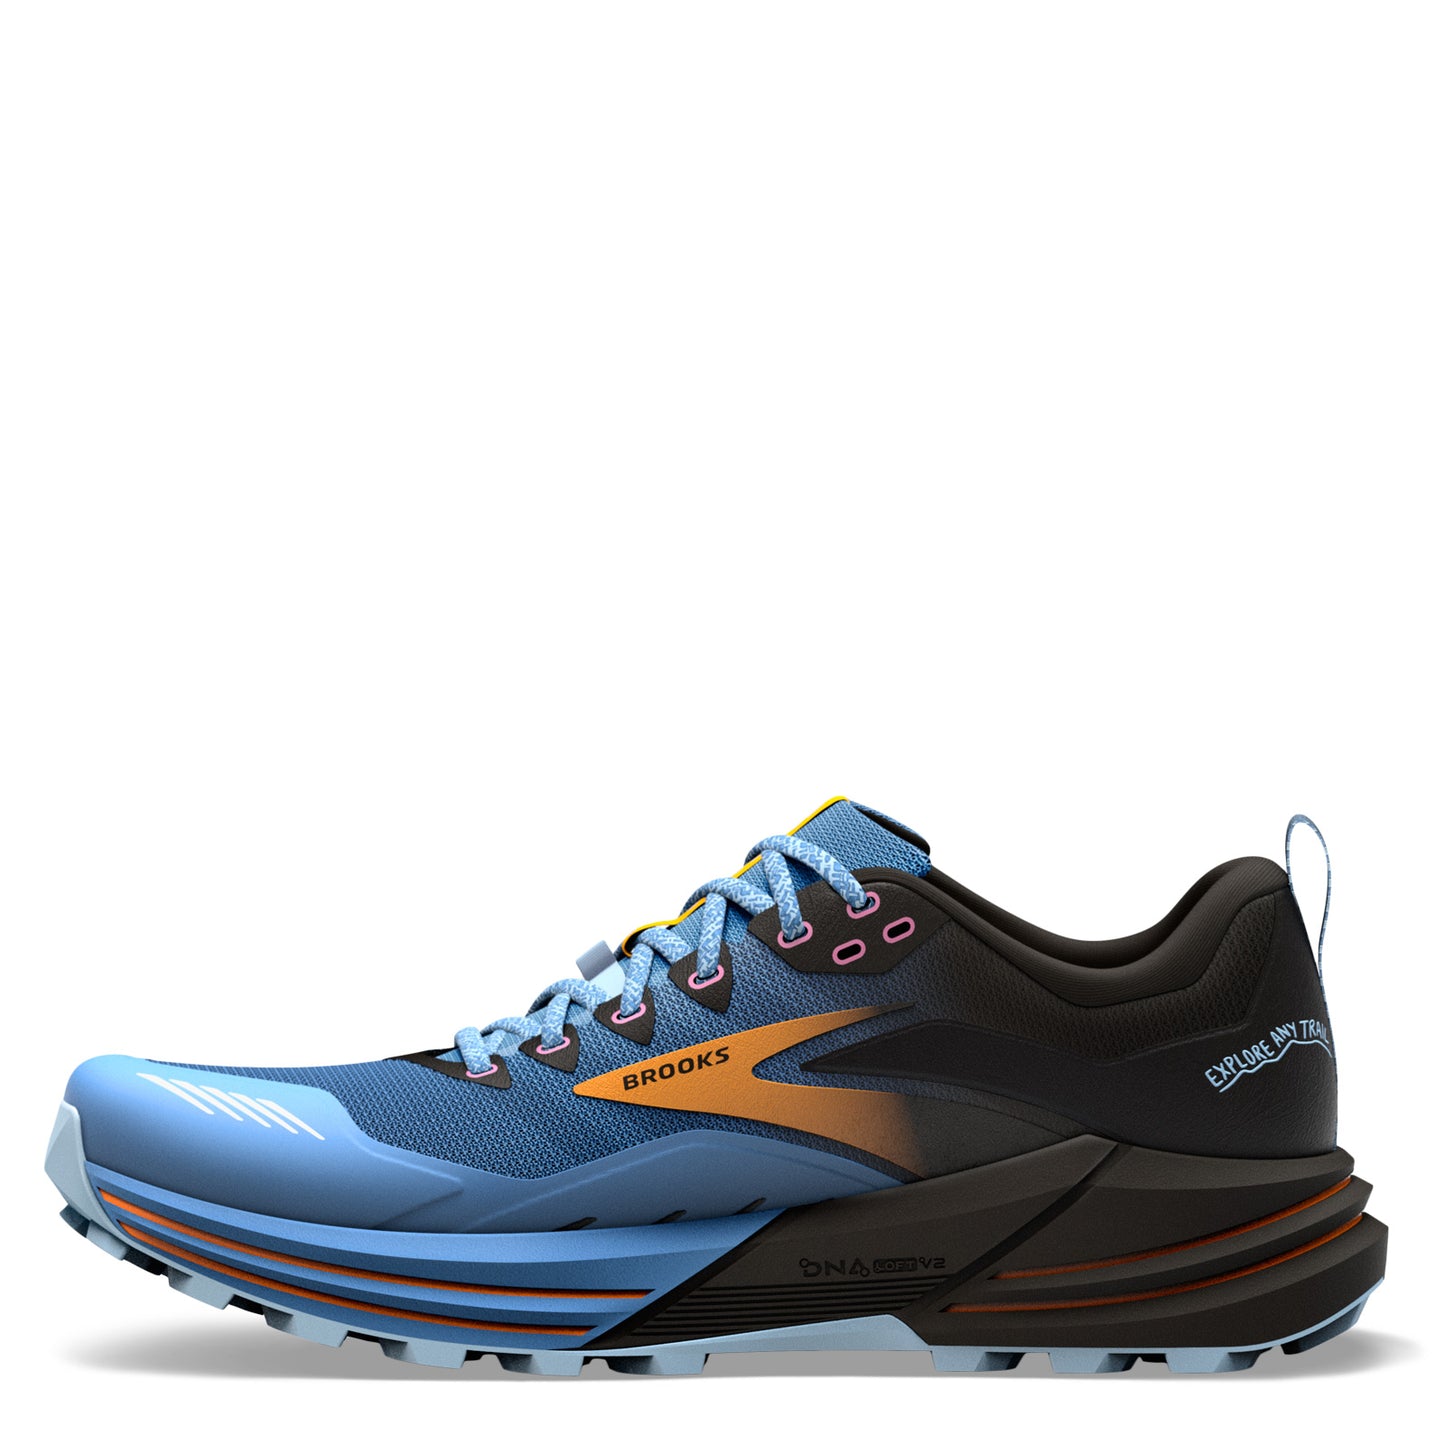 Peltz Shoes  Women's Brooks Cascadia 16 Trail Running Shoe Blue/Black/Yellow 120363 1B 414